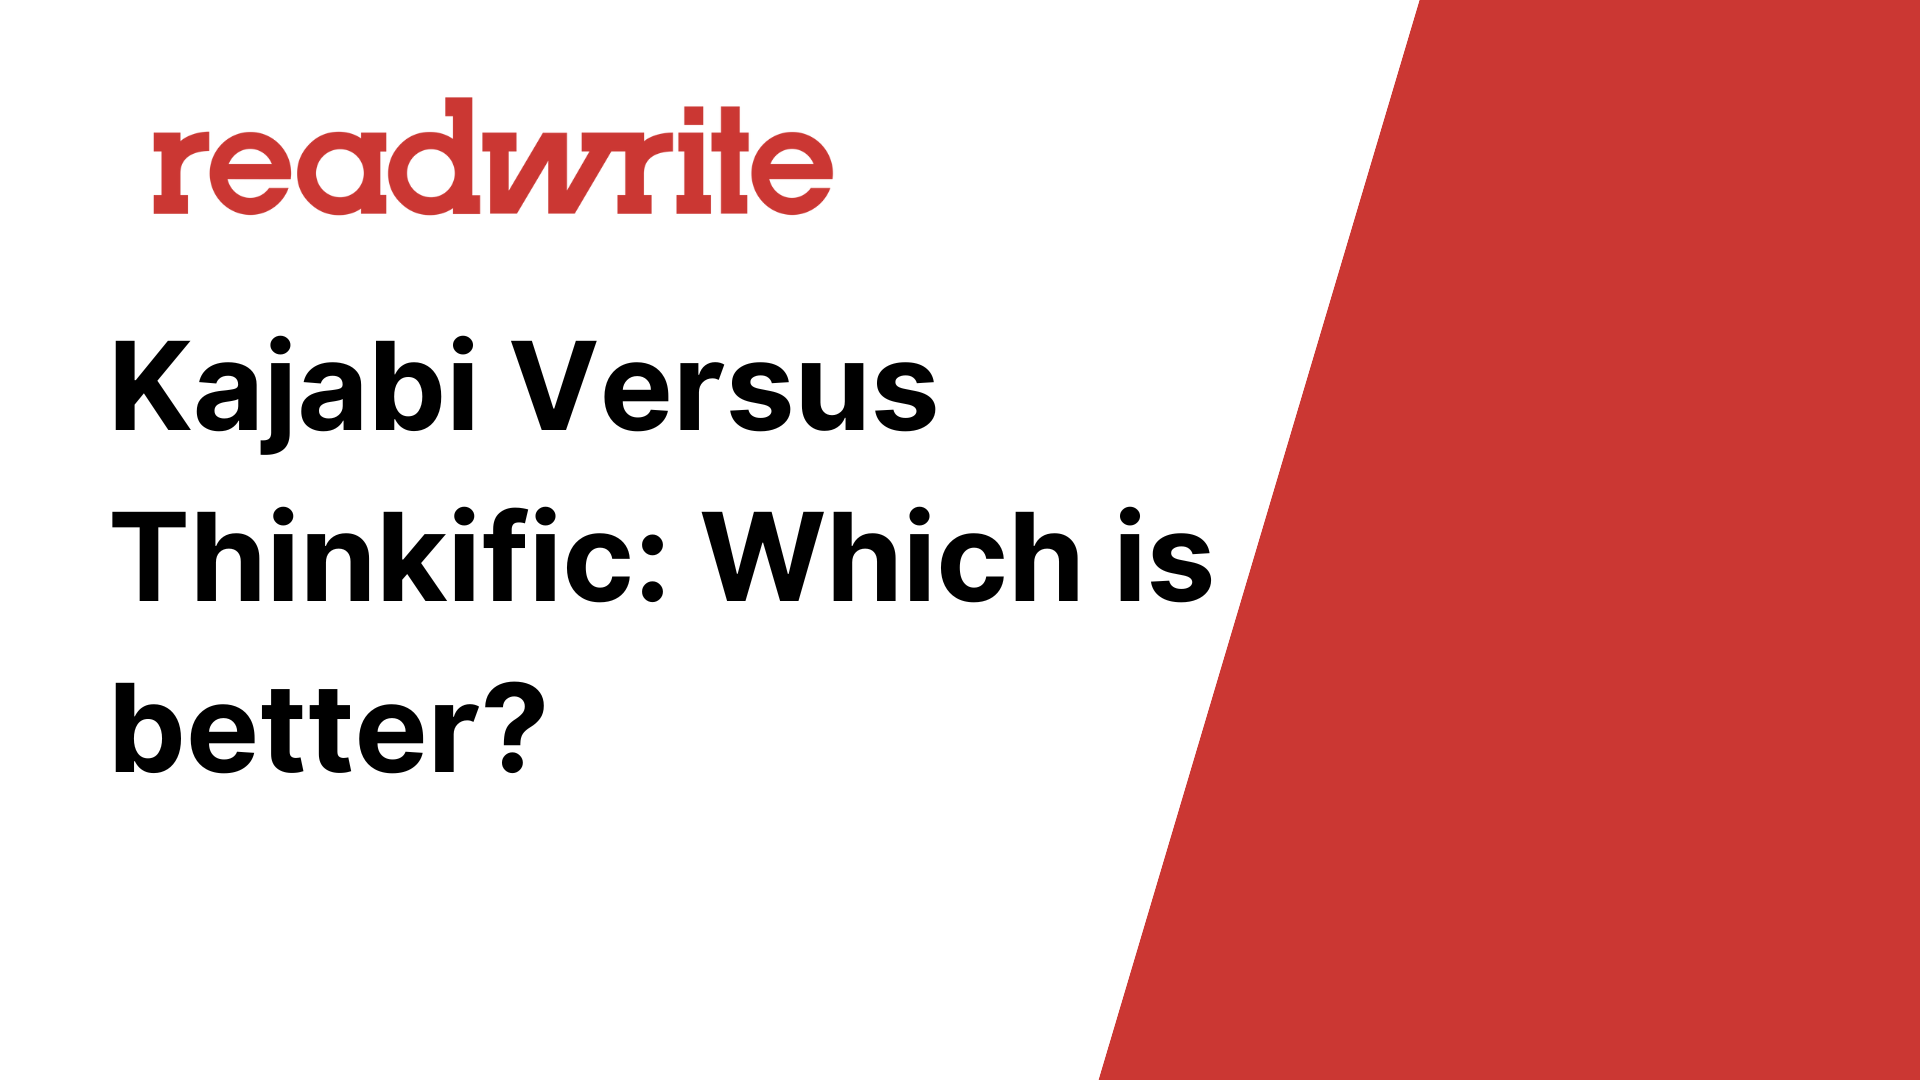 Kajabi Versus Thinkific: Which is better? - readwrite.com